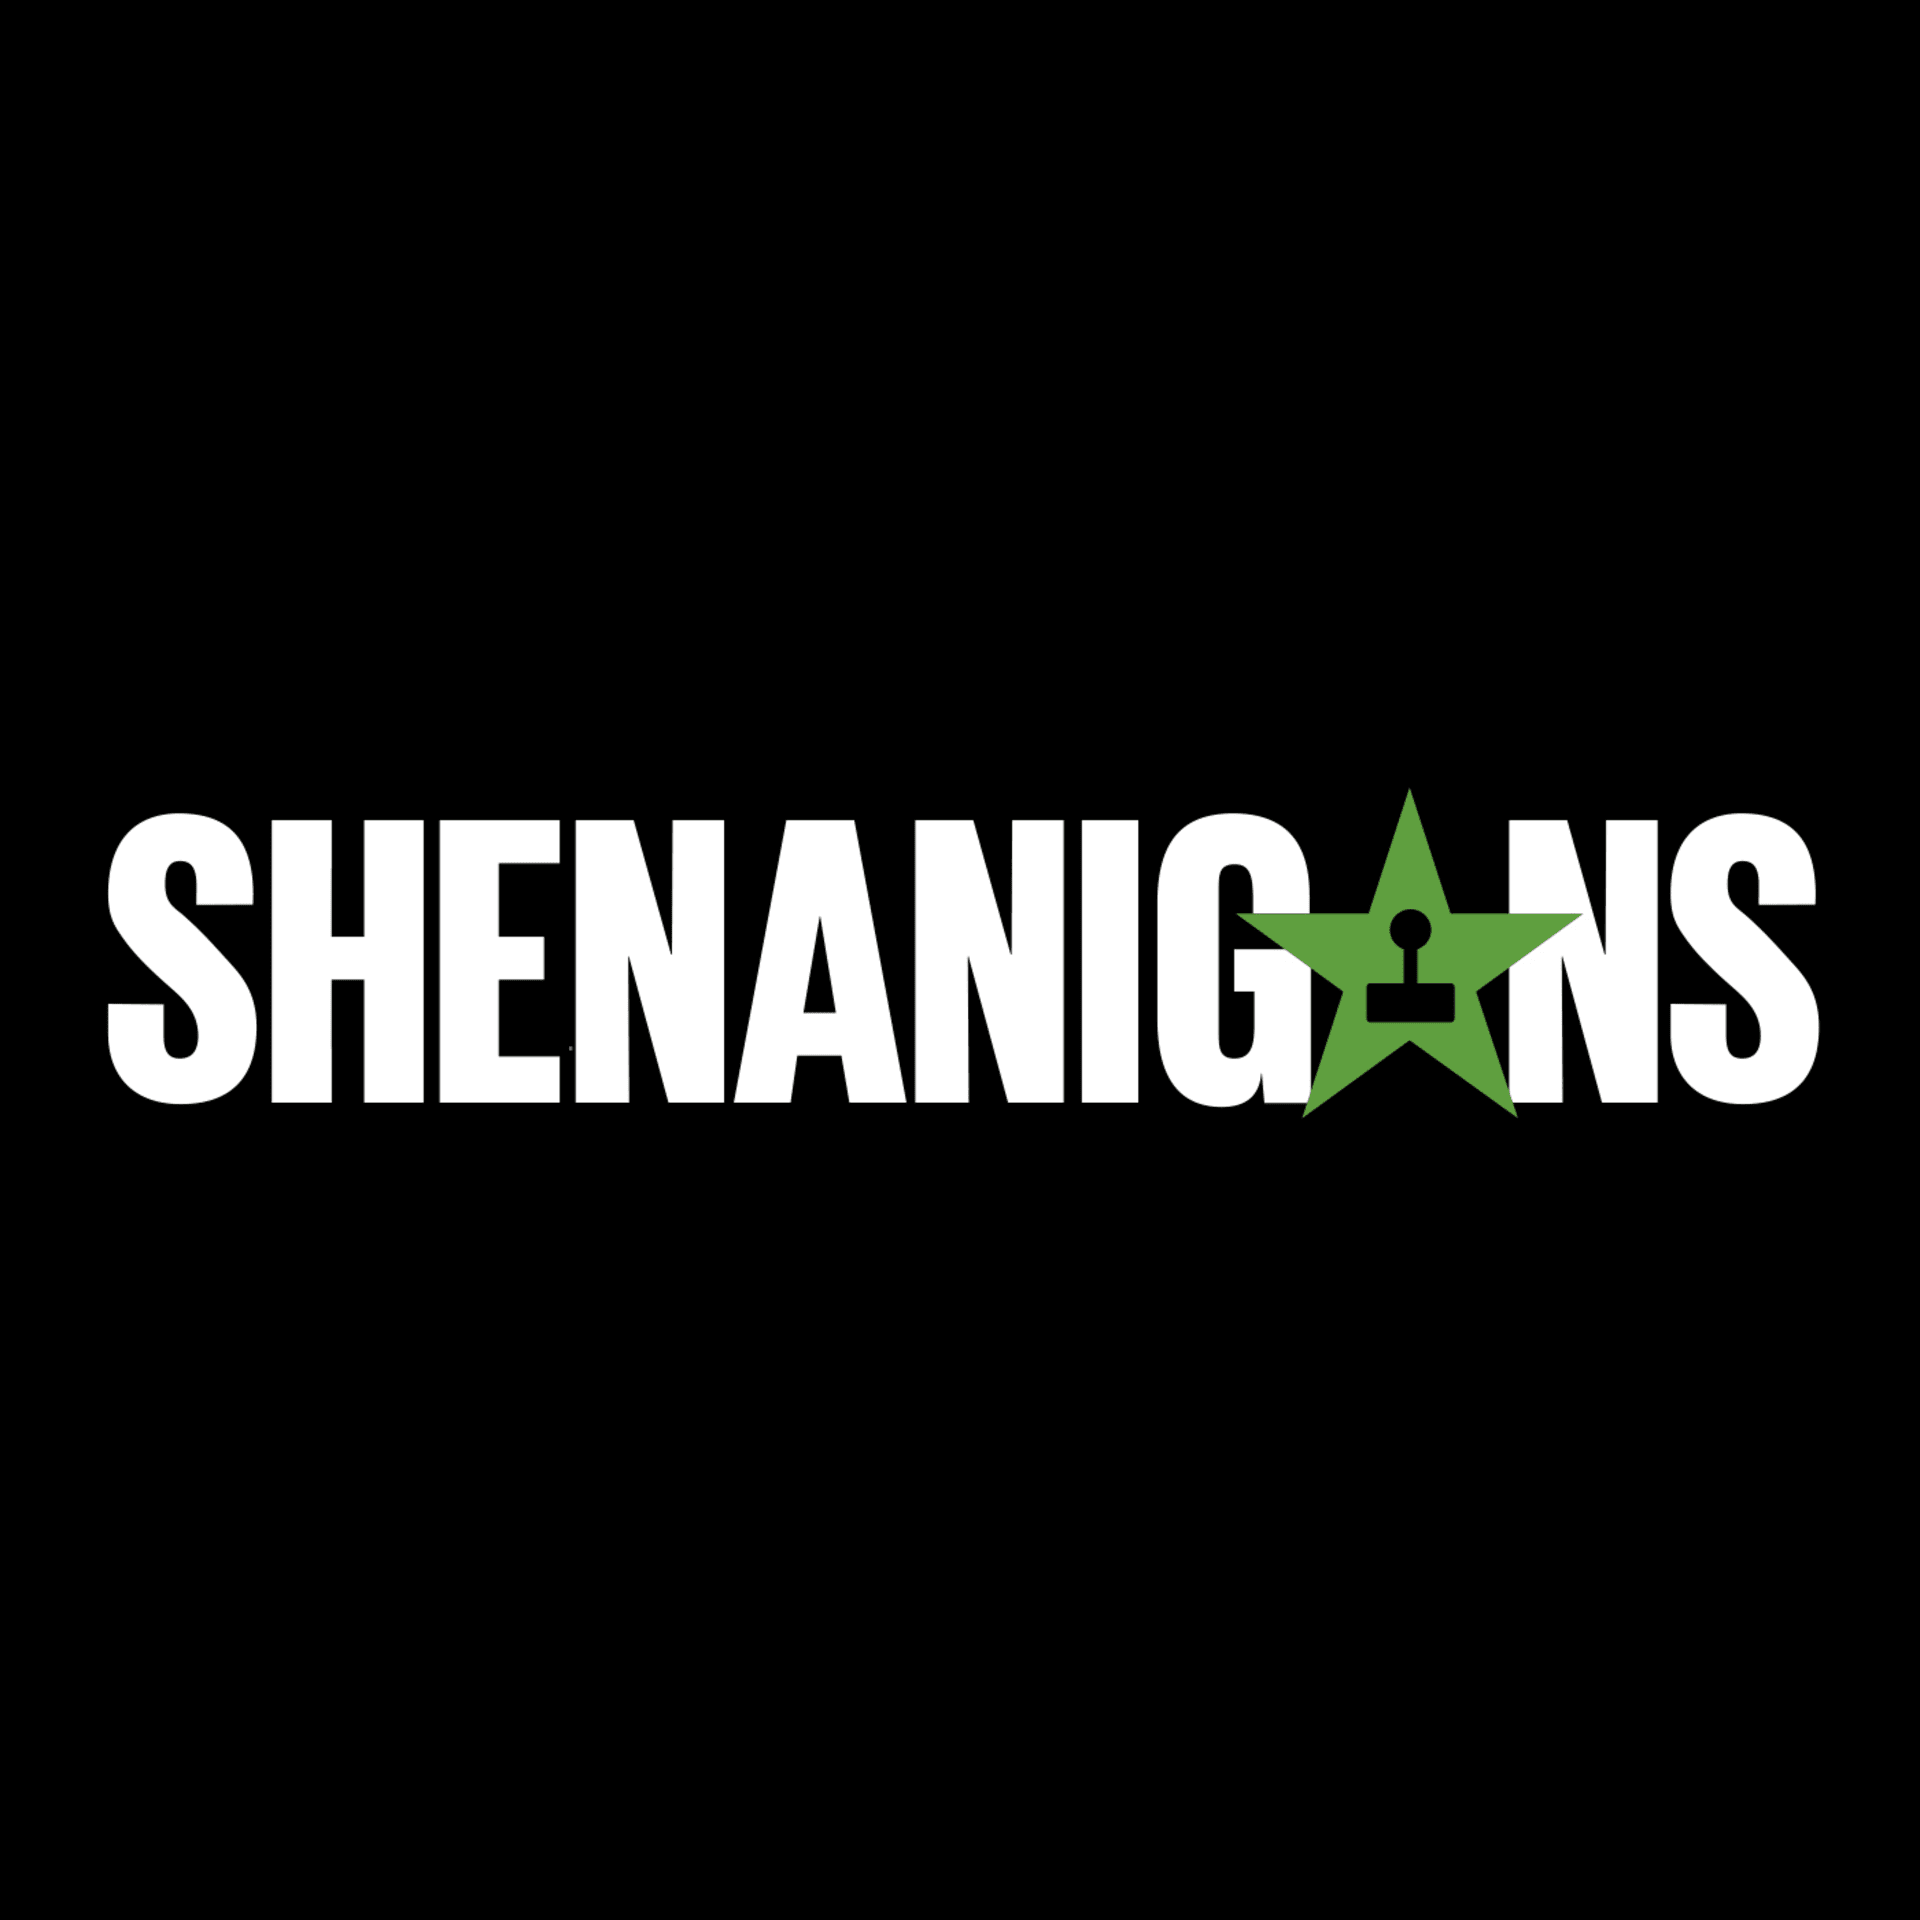 Shenanigans Logo - Series Shenanigans - Rooster Teeth